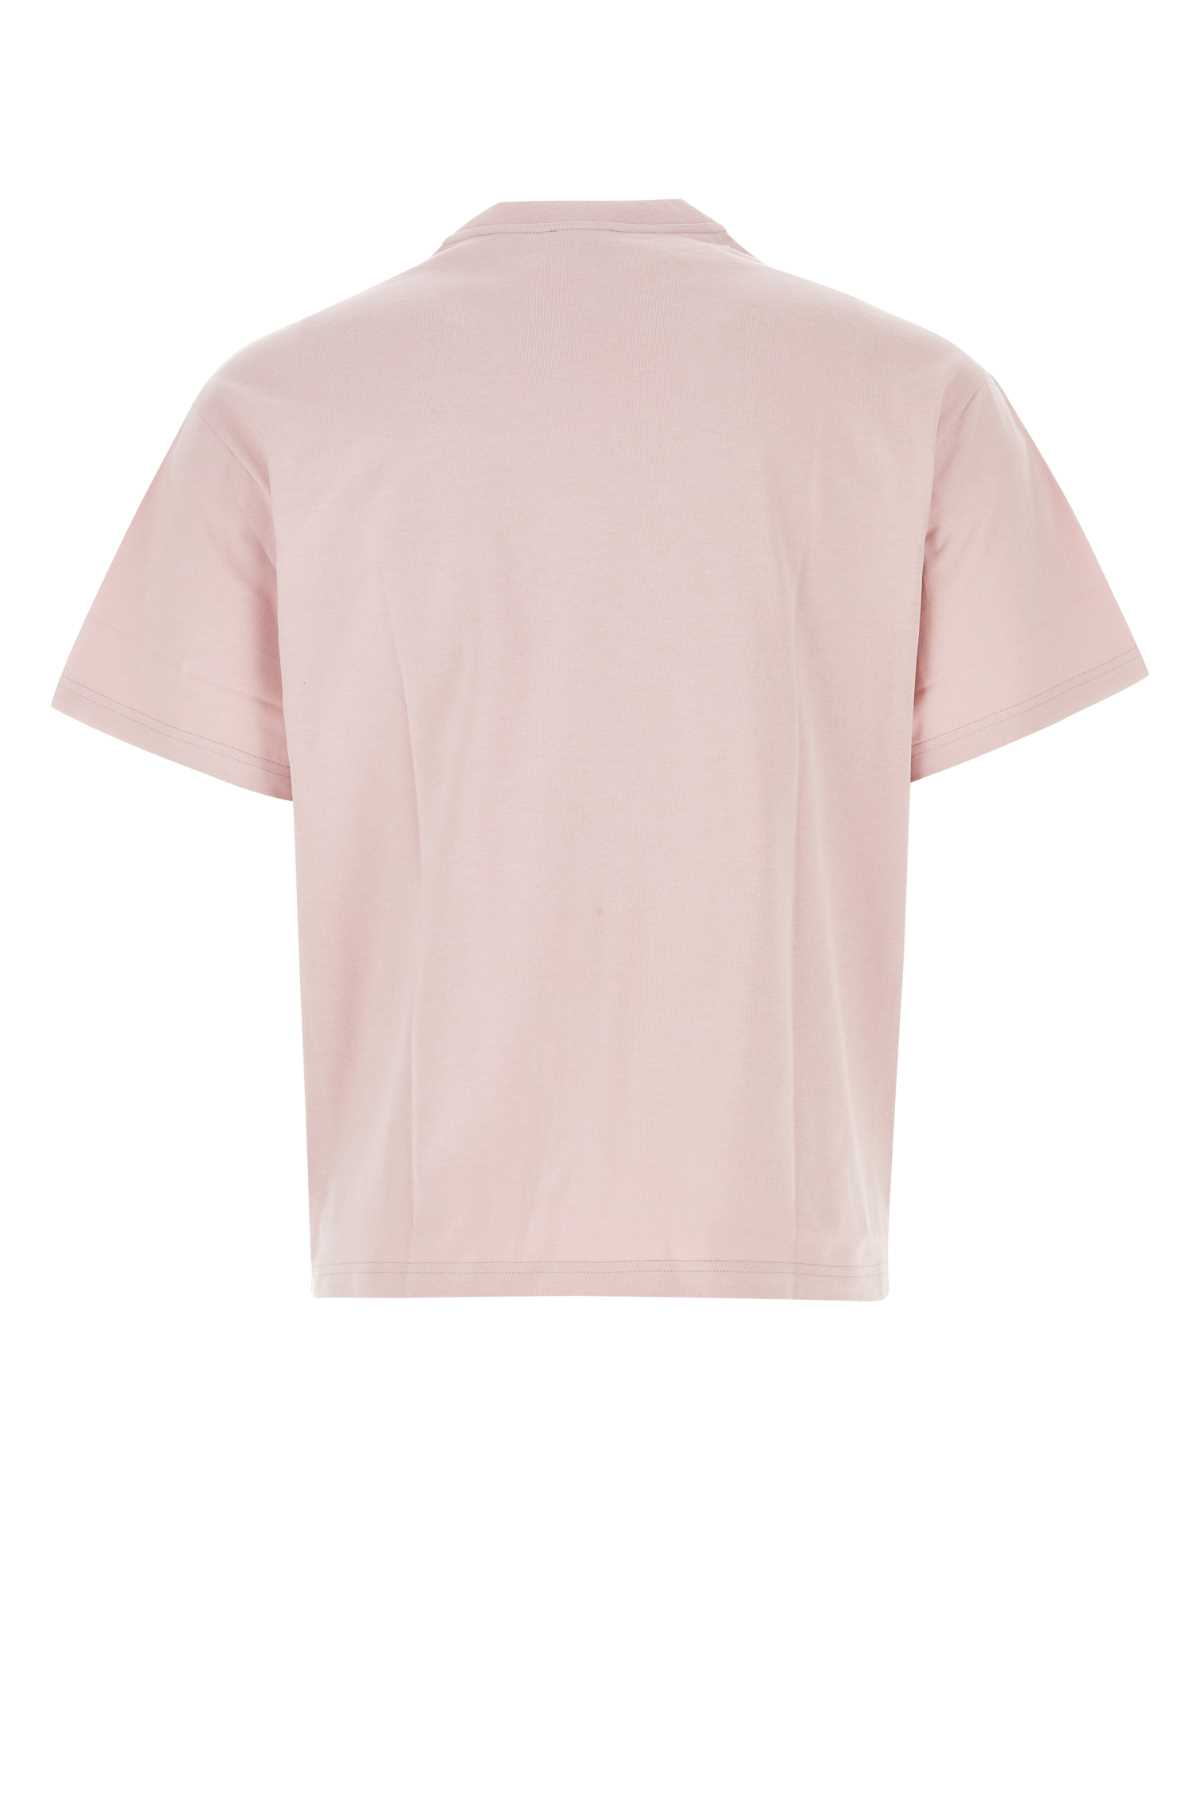 Etro Pink Cotton T-shirt In Lightrose